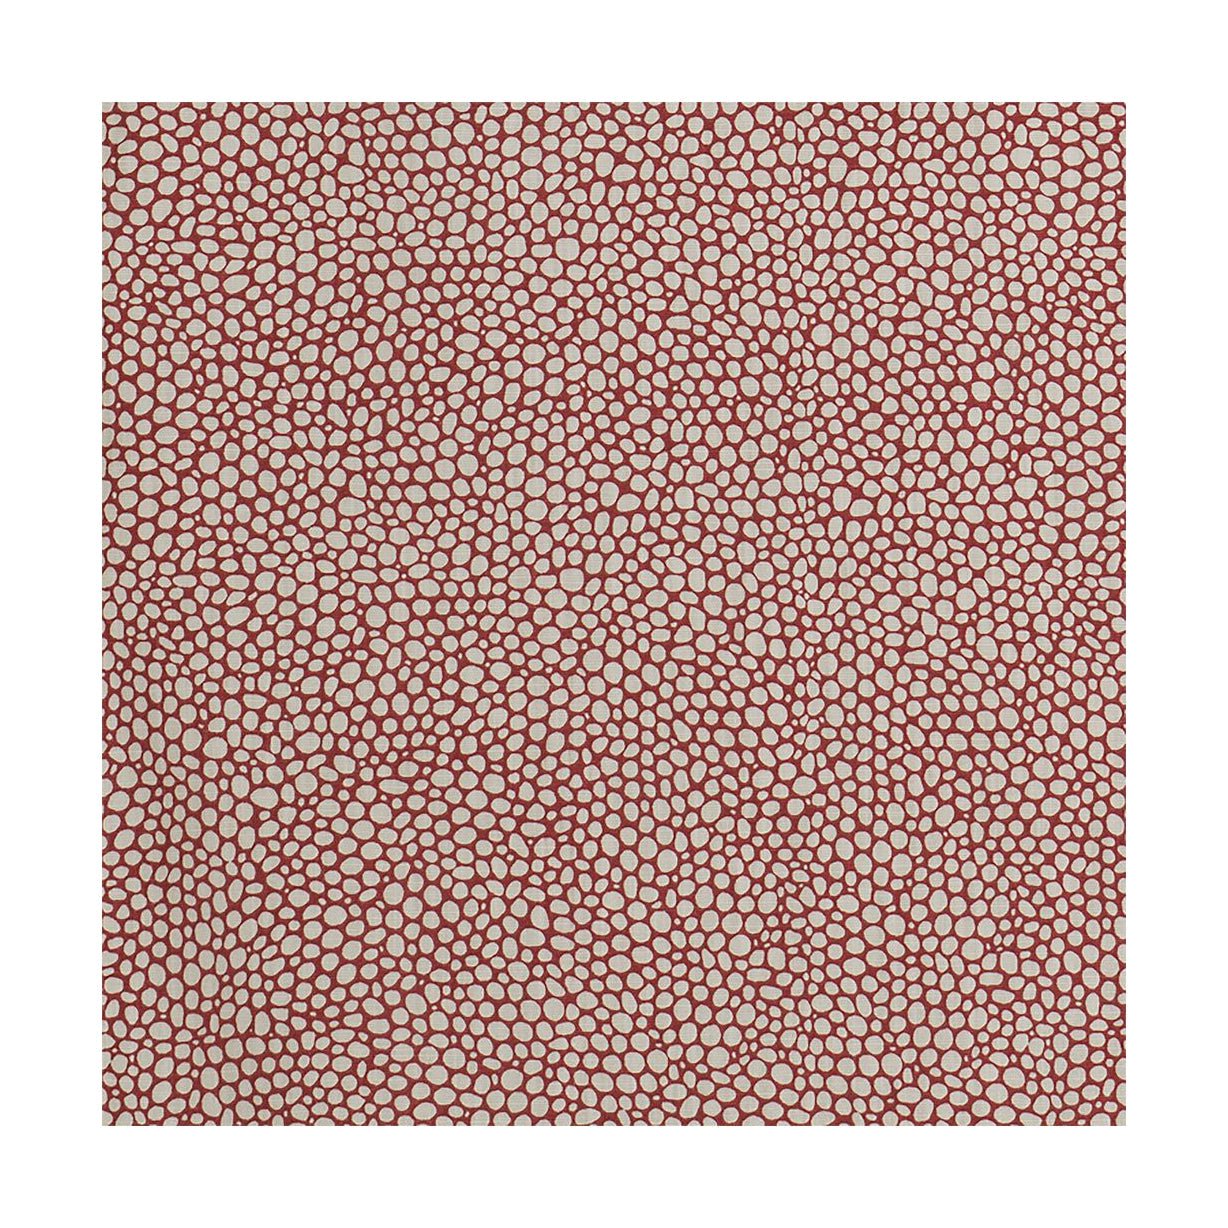 Spira Dotte Fabric Width 150 Cm (Price Per Meter), Red